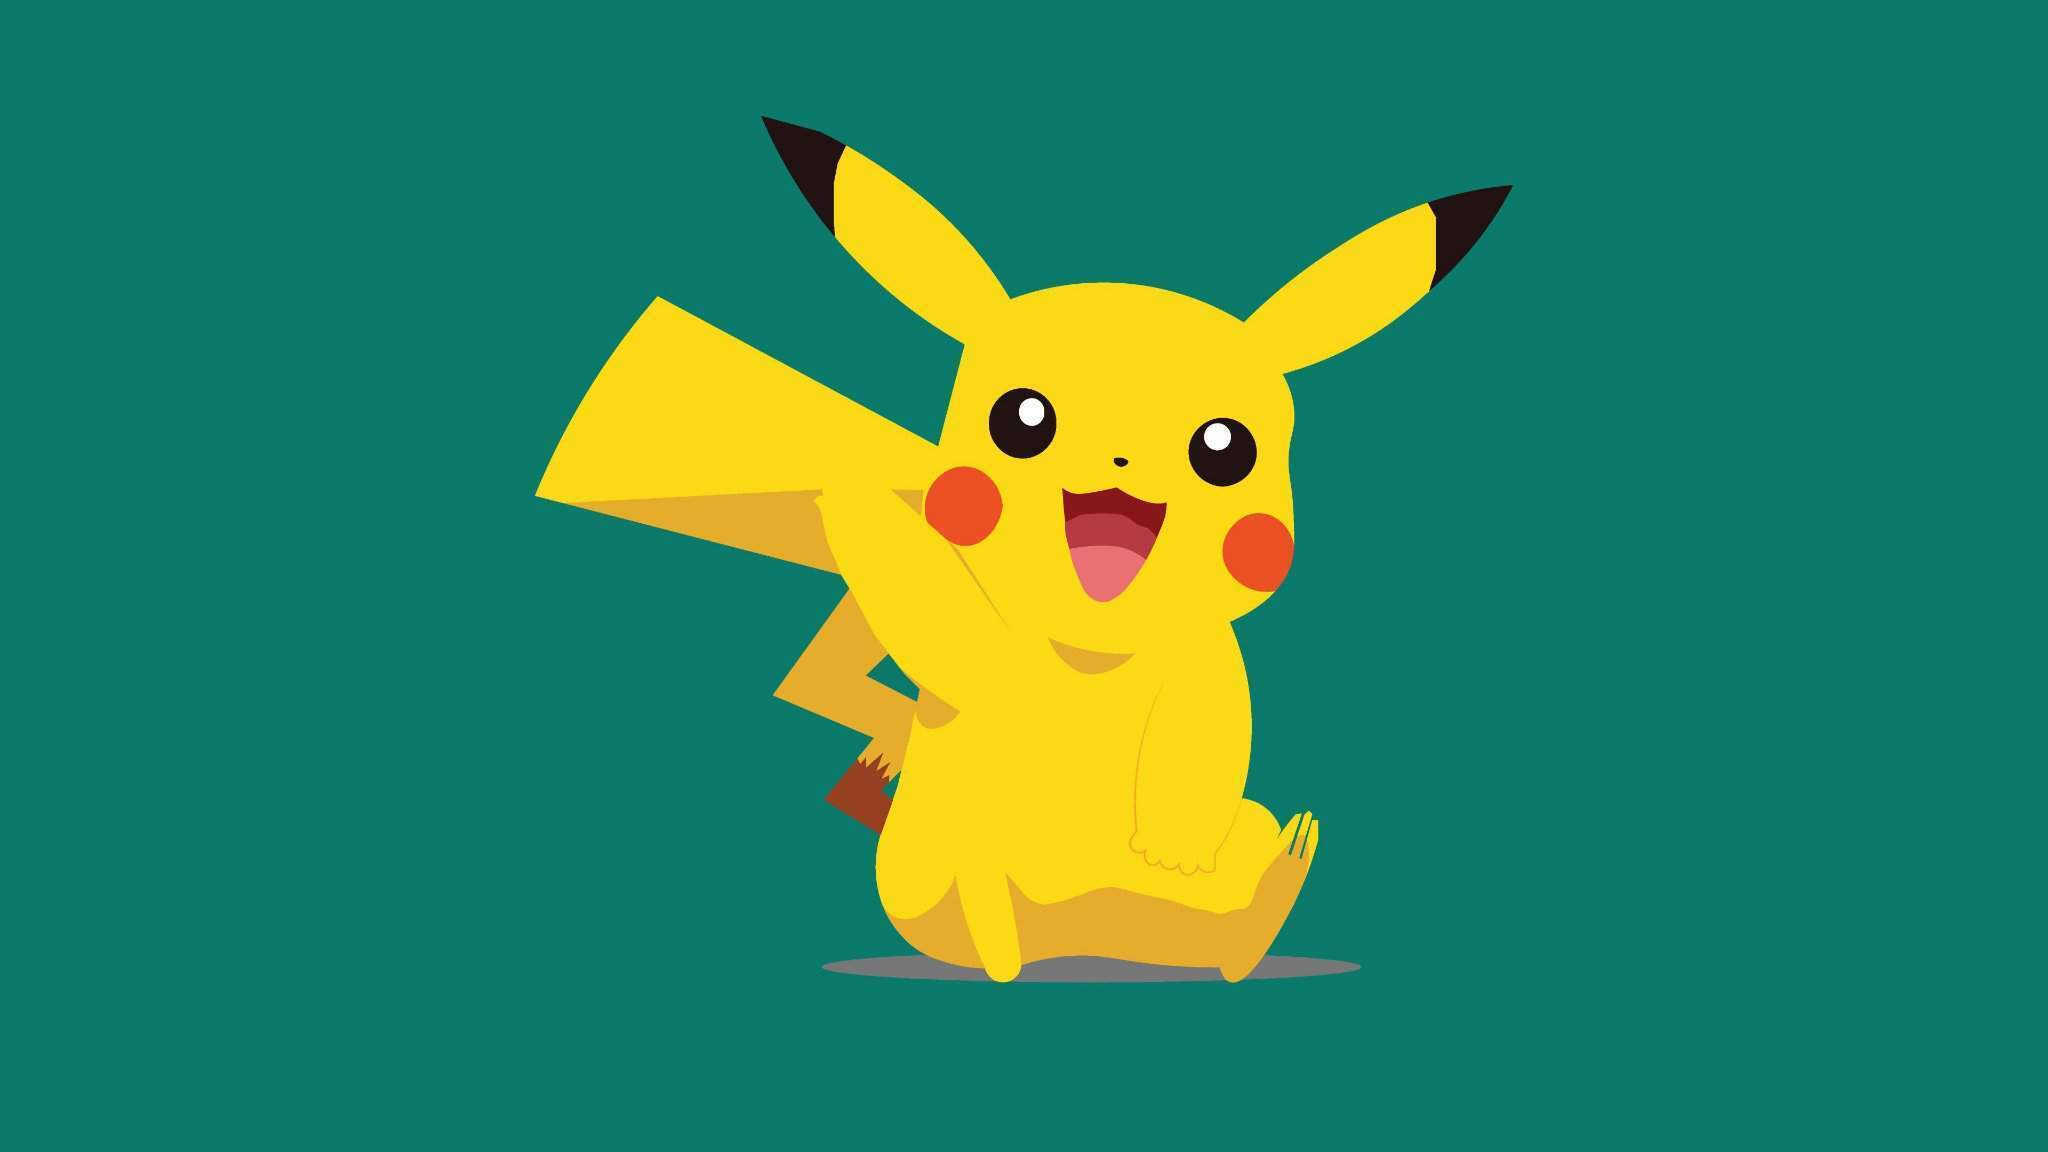 
hình nền pikachu cute